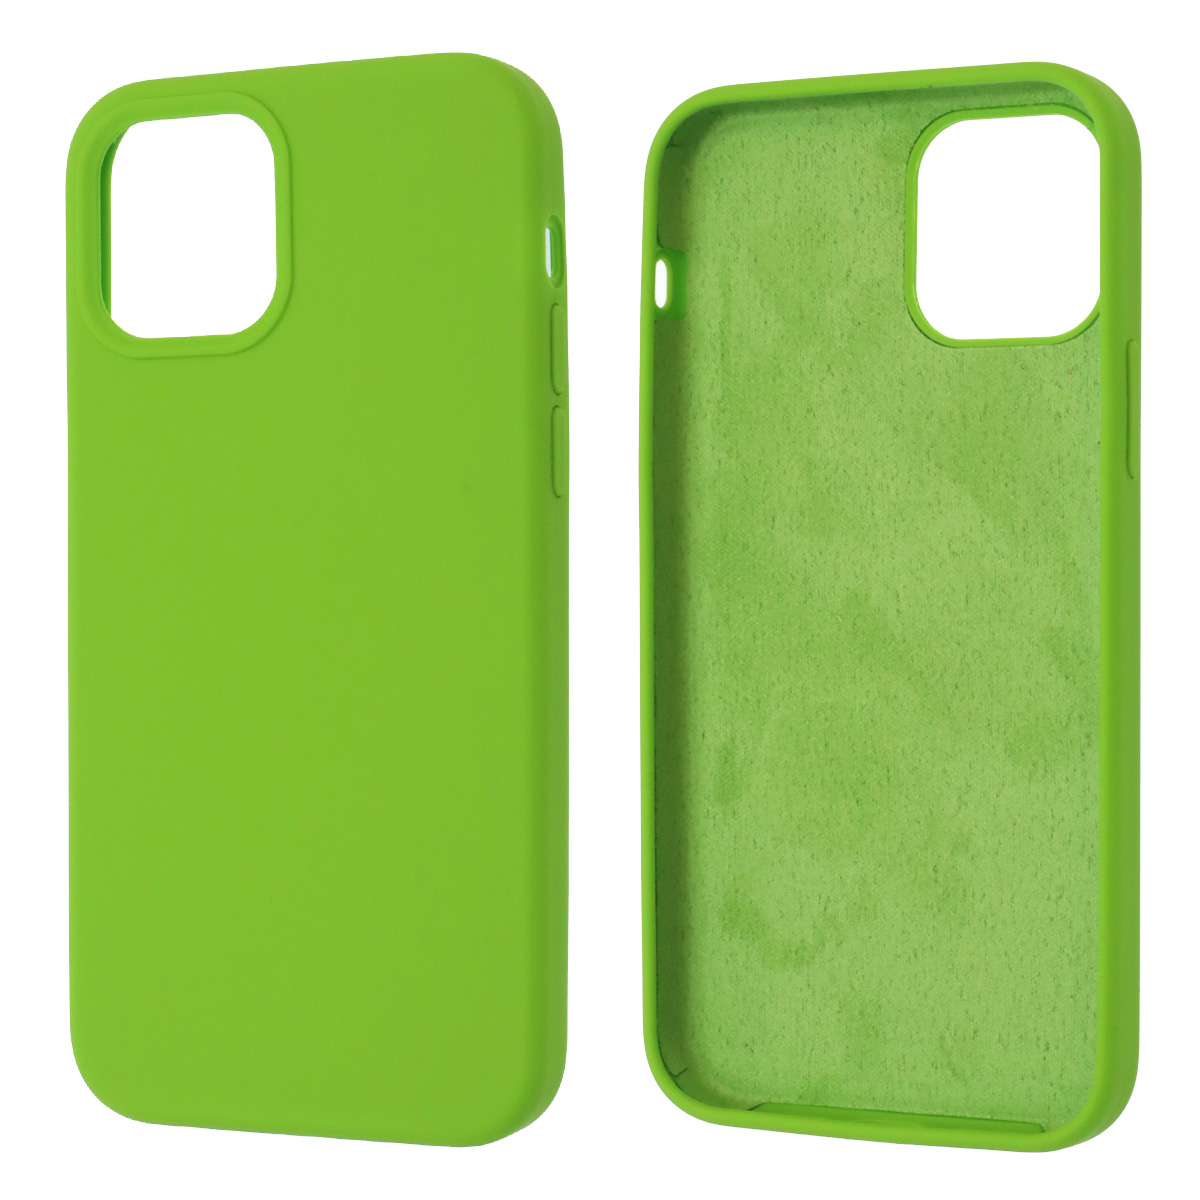 Чехол накладка Silicon Case для APPLE iPhone 12, iPhone 12 Pro, силикон, бархат, цвет ярко зеленый